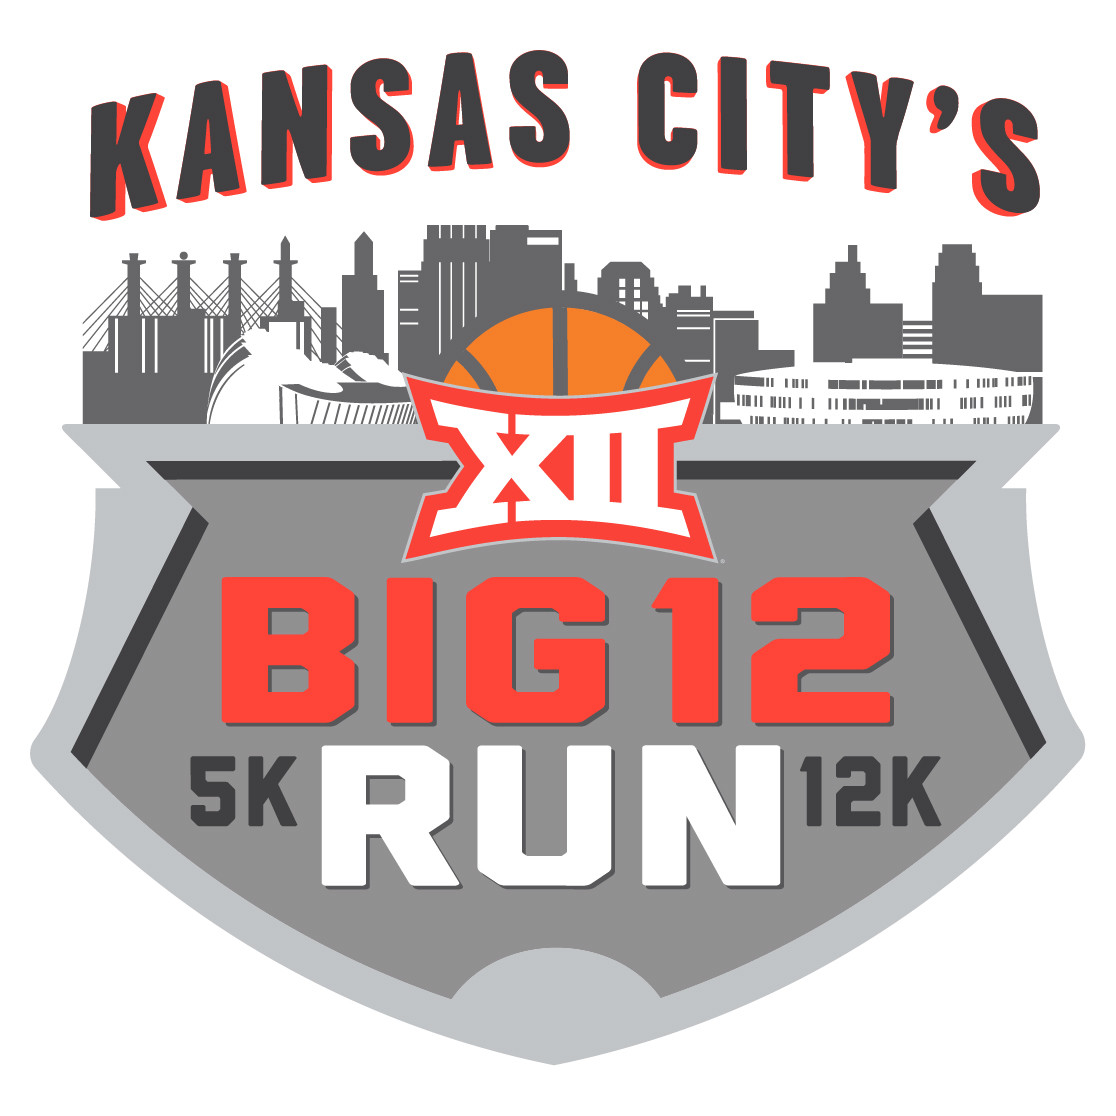 Kansas City’s Big 12 Run logo on RaceRaves